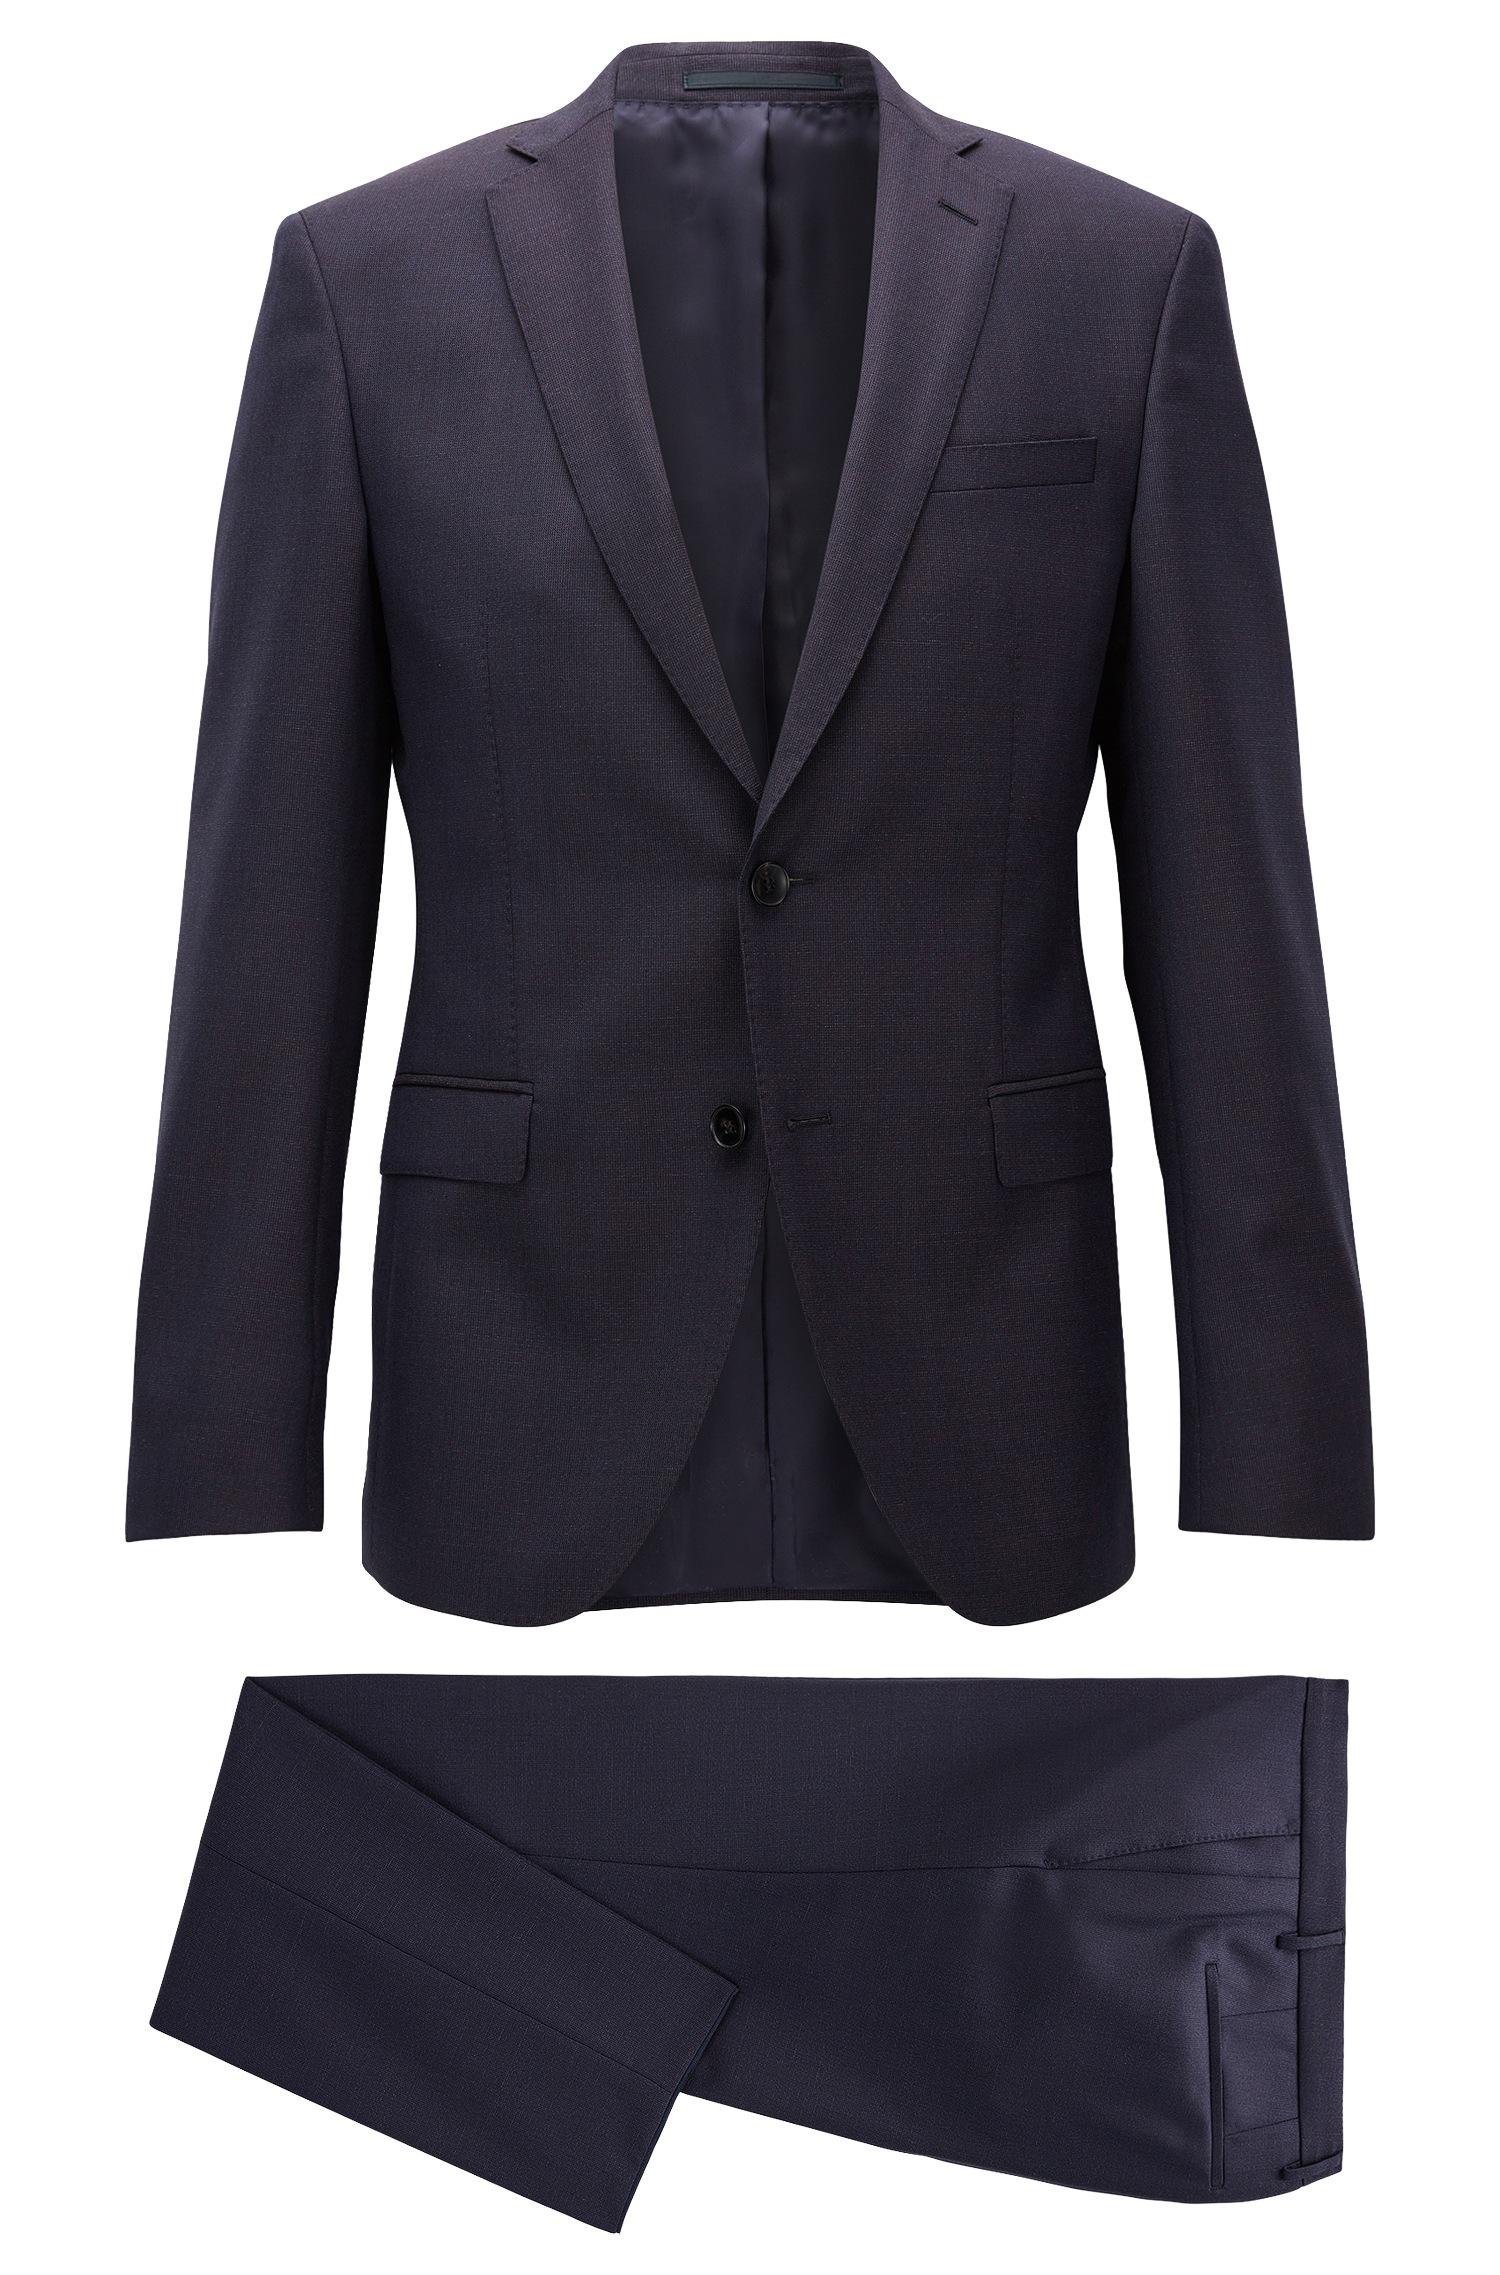 BOSS by HUGO BOSS Italian Super 130 Virgin Wool Suit, Extra Slim Fit ...